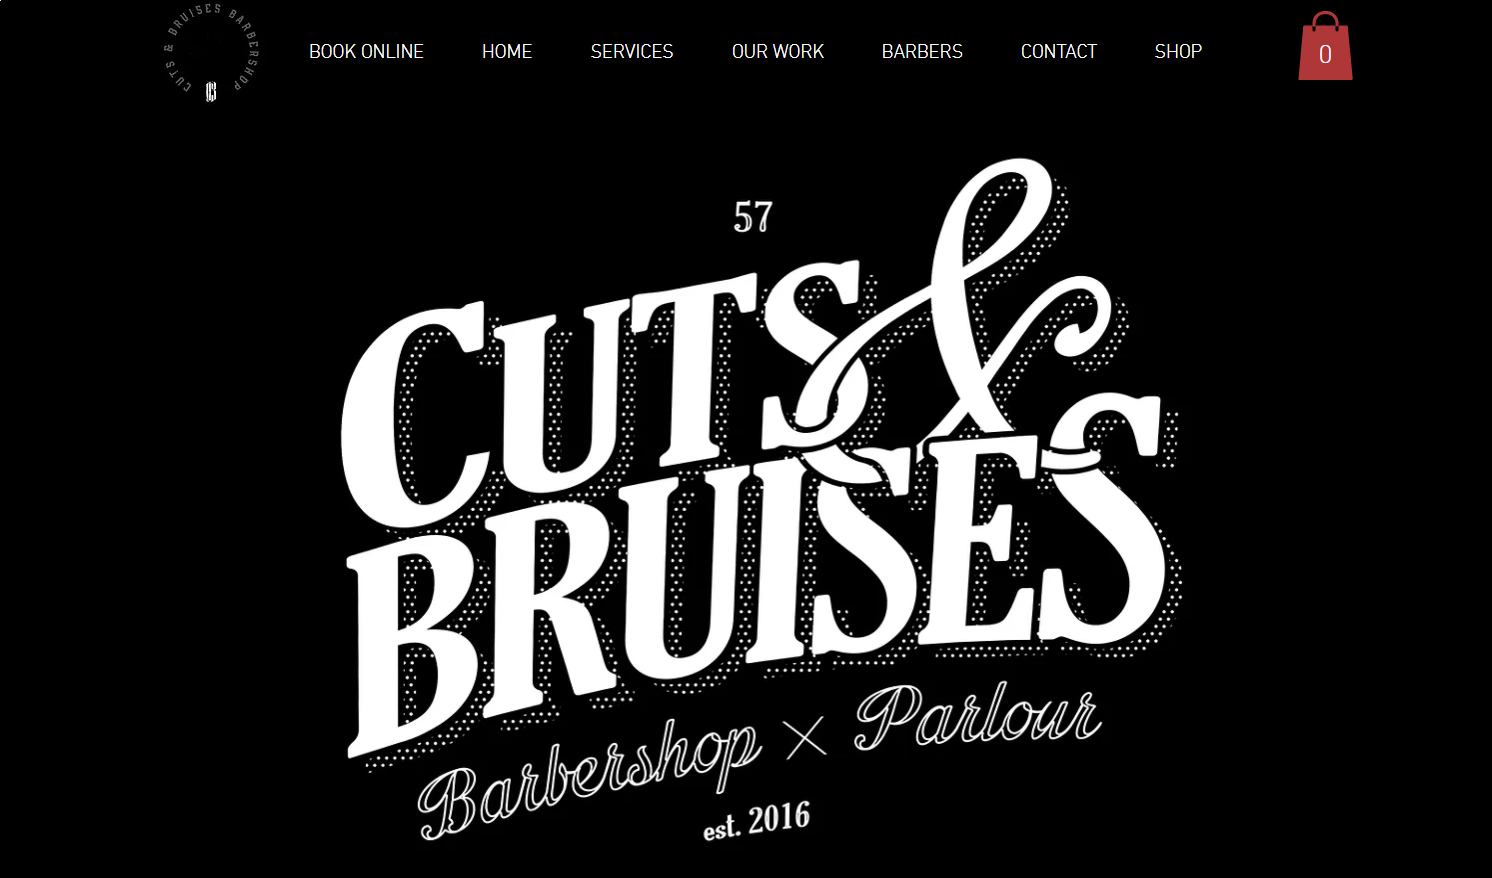 Cuts & Bruises website